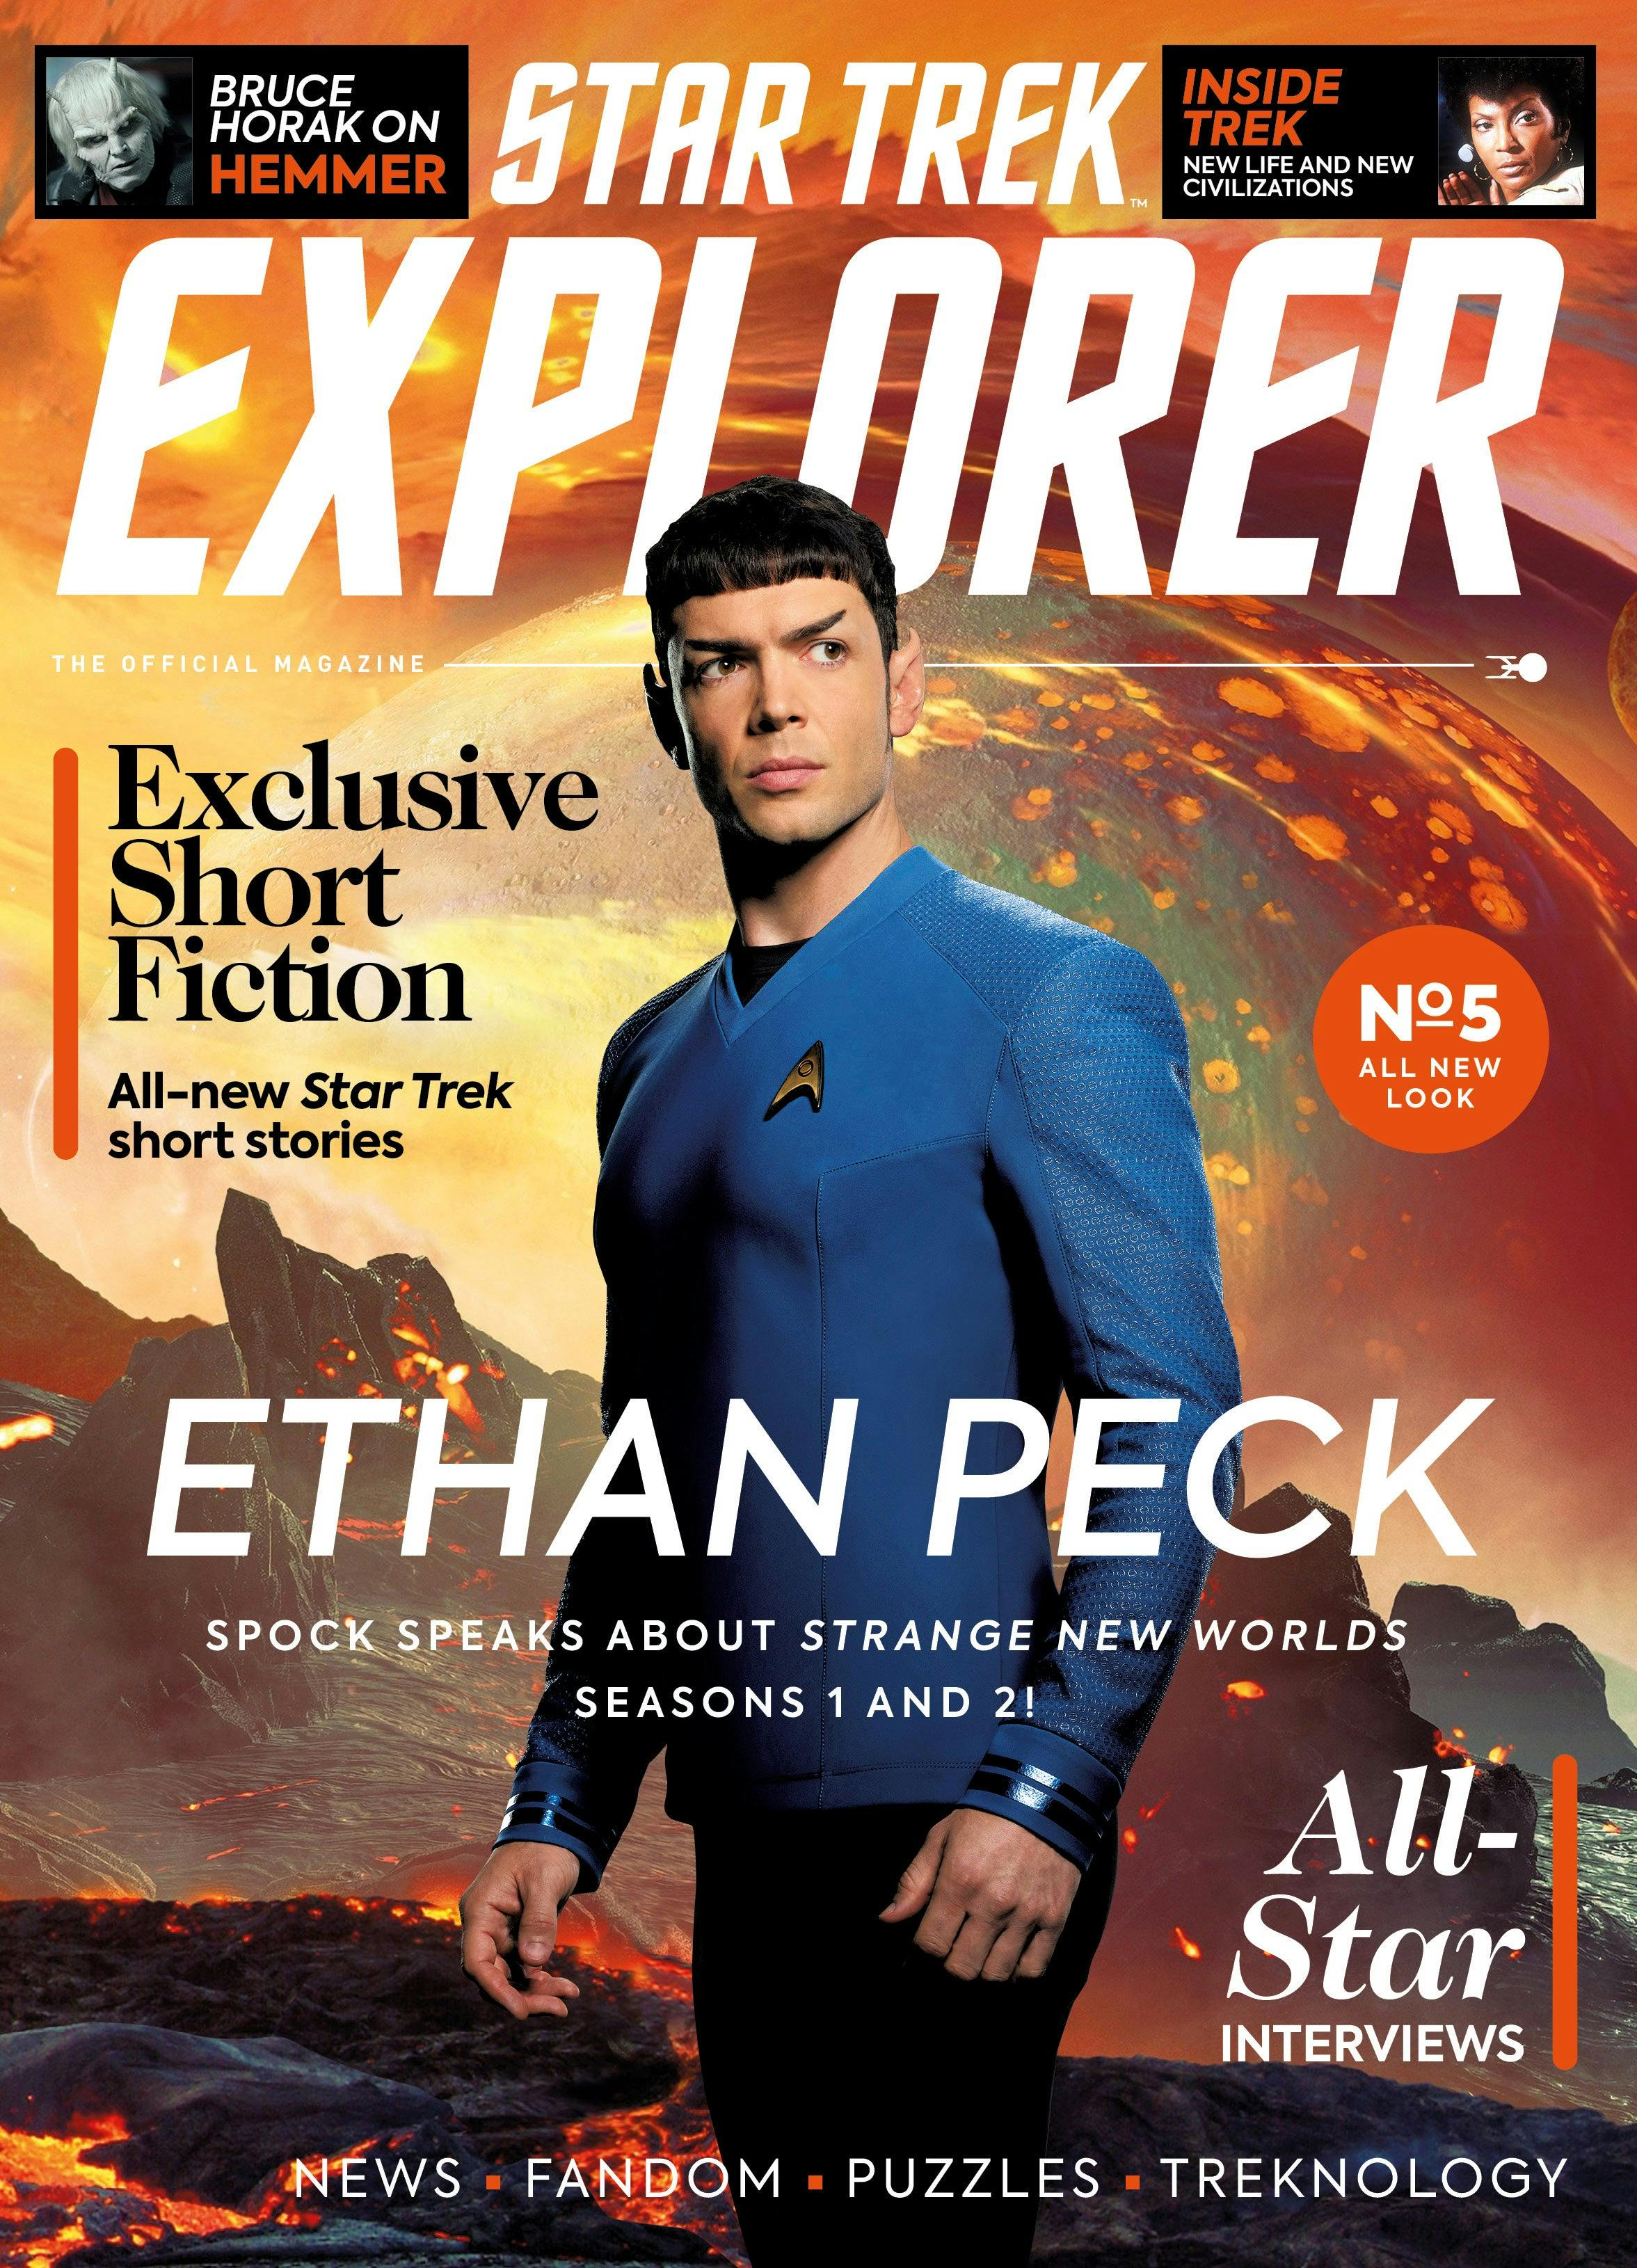 Star Trek Explorer #5 - Newsstand Cover featuring Star Trek: Strange New Worlds' Ethan Peck